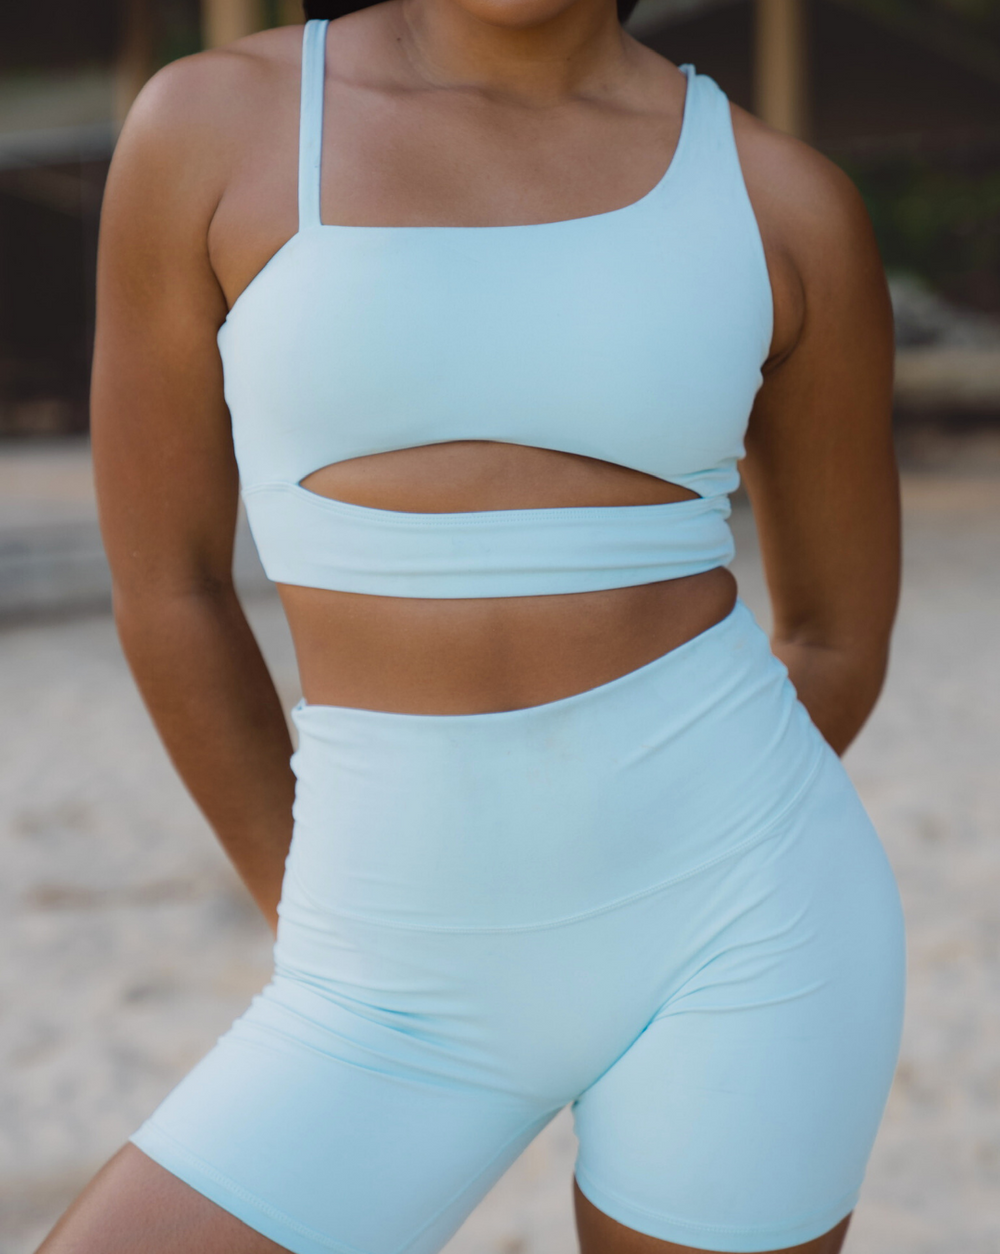 SHCKE One Shoulder Sports Bra for Women Breathable Mesh Yoga Bras One Strap  Crop Top Sexy Cute Medium Support Workout Bras 